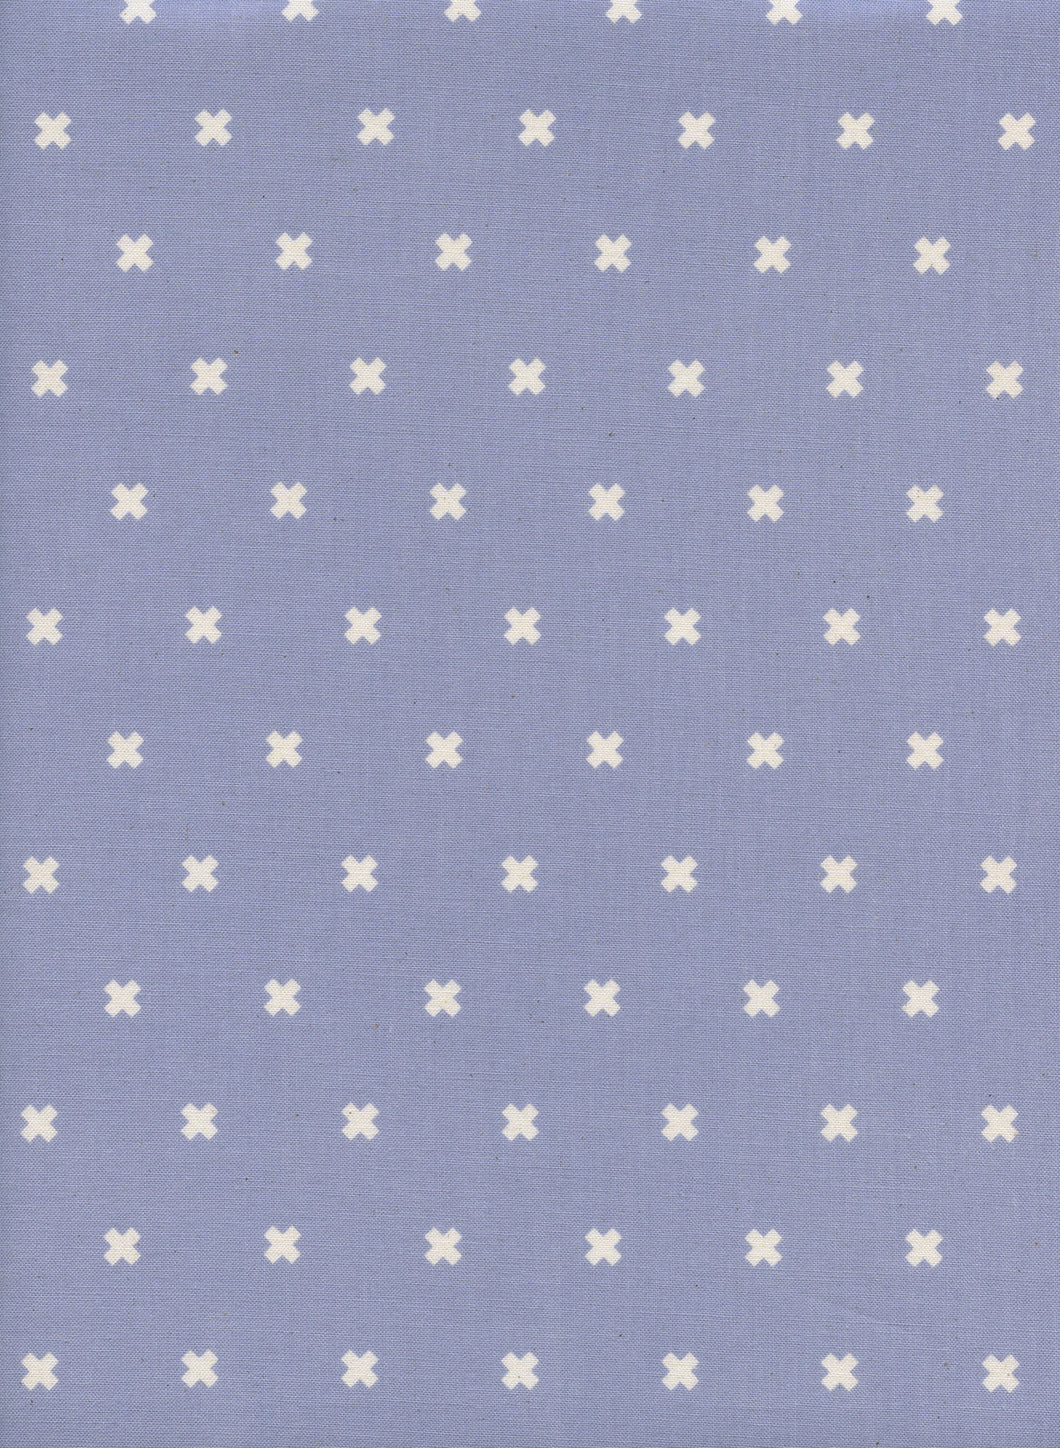 XOXO in Thistle, Cotton+Steel Basics, Rashida Coleman Hale, RJR Fabrics, 100% Cotton Fabric, 5001-018